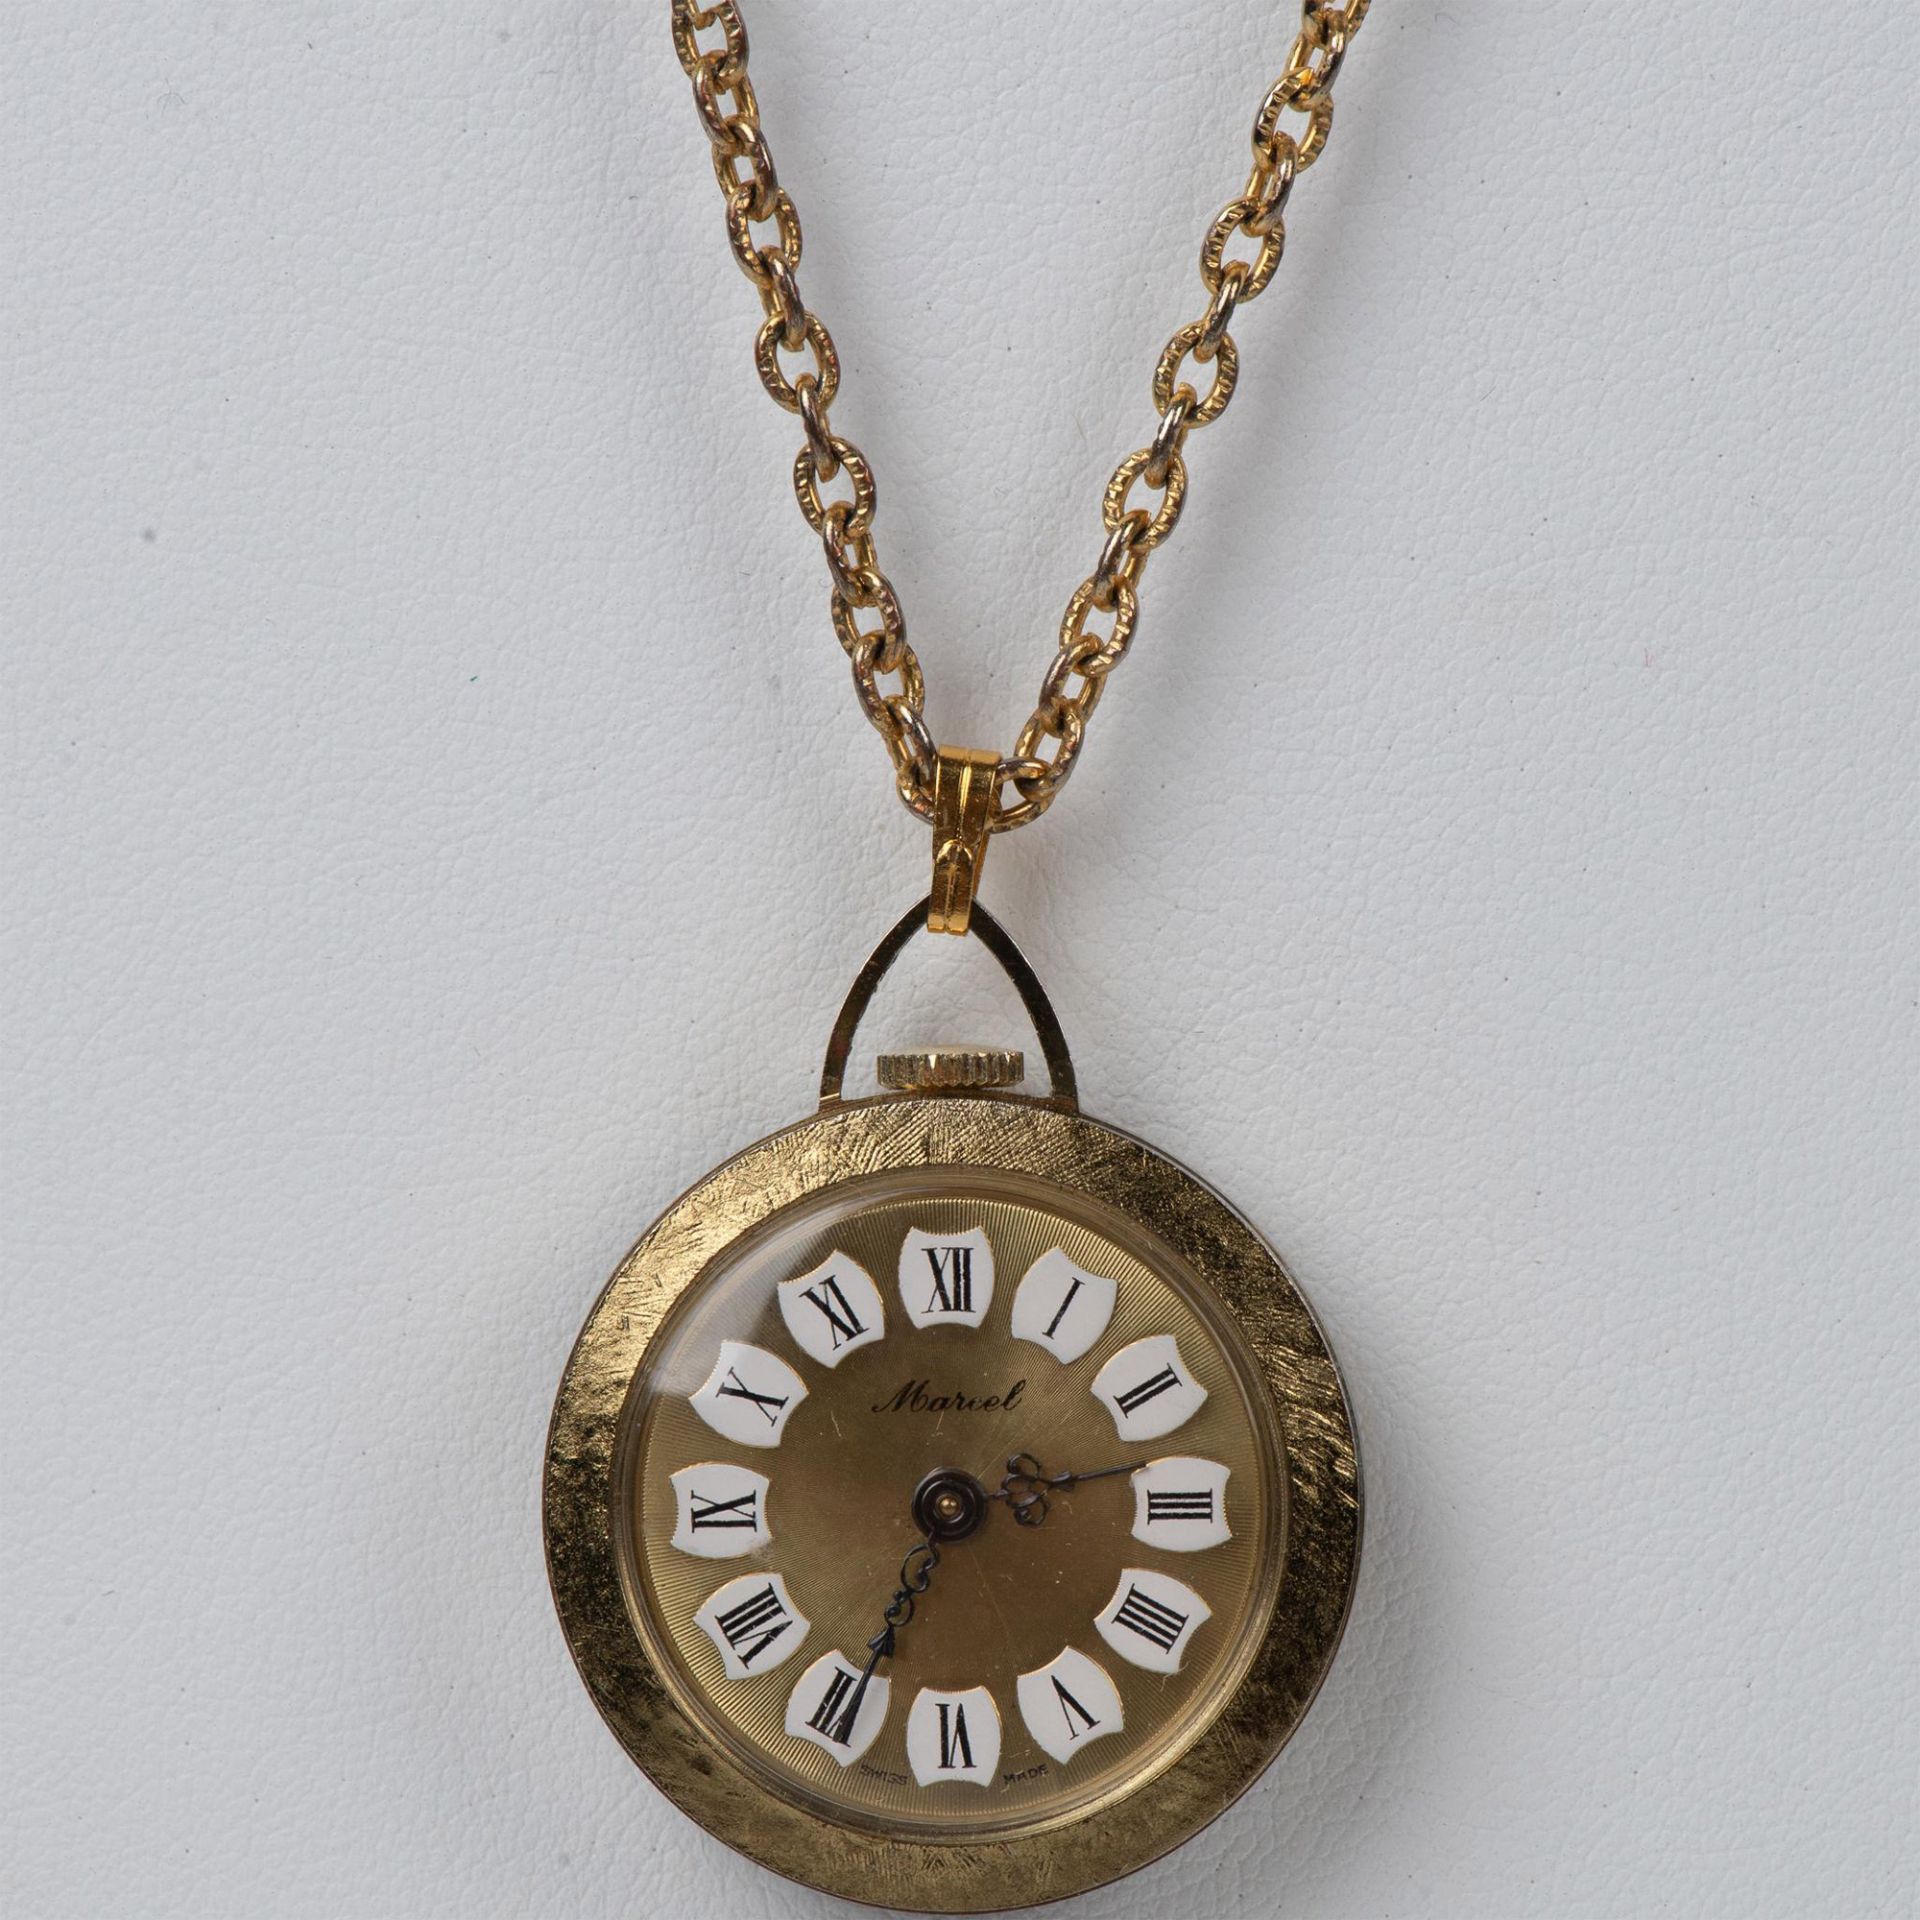 Vintage Marcel Watch Necklace Pendant - Image 10 of 14